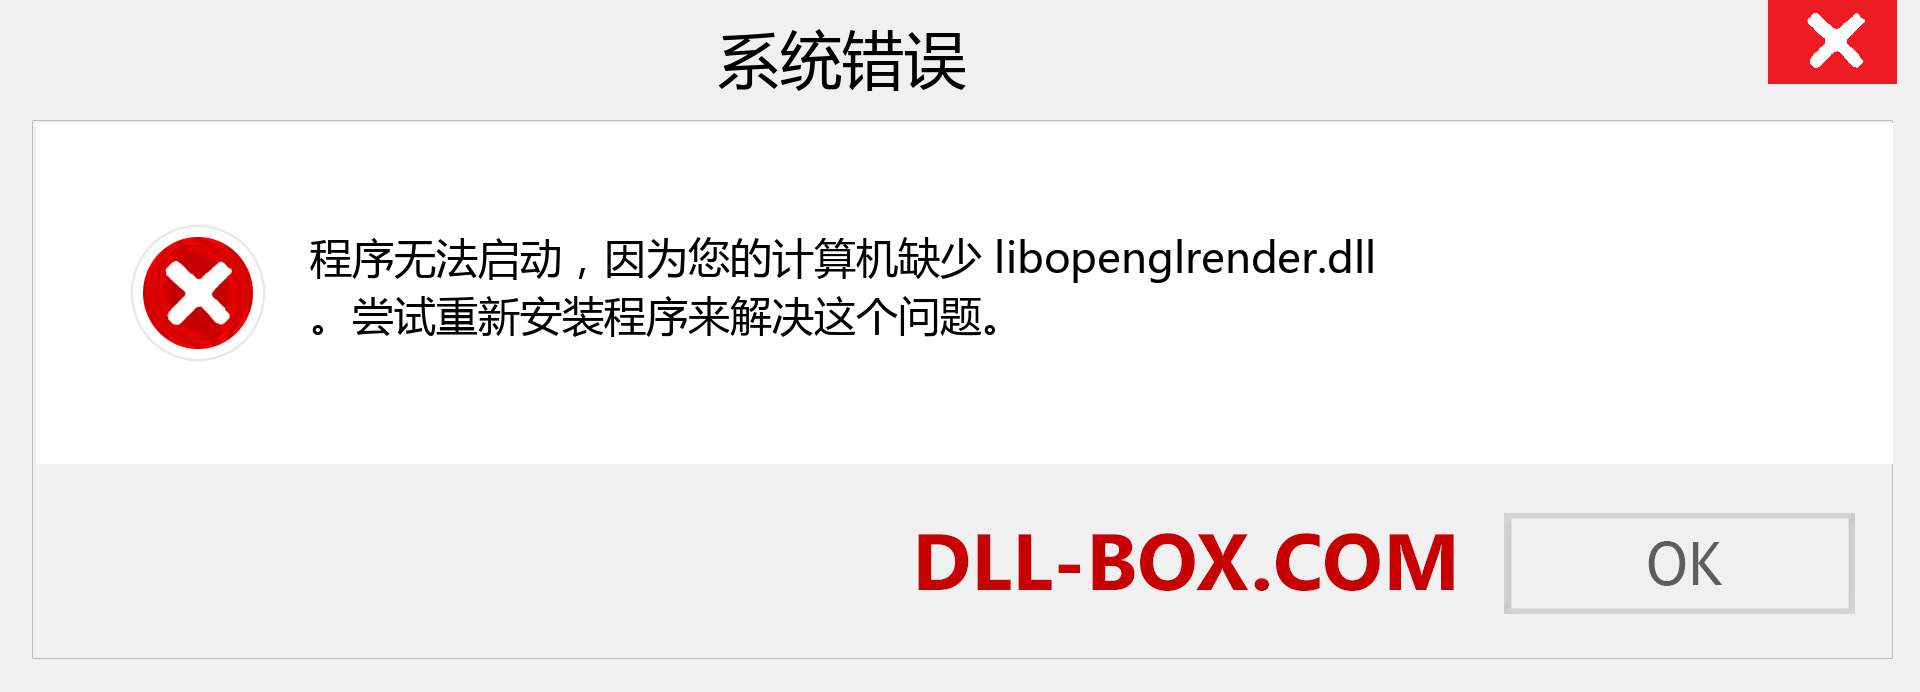 libopenglrender.dll 文件丢失？。 适用于 Windows 7、8、10 的下载 - 修复 Windows、照片、图像上的 libopenglrender dll 丢失错误